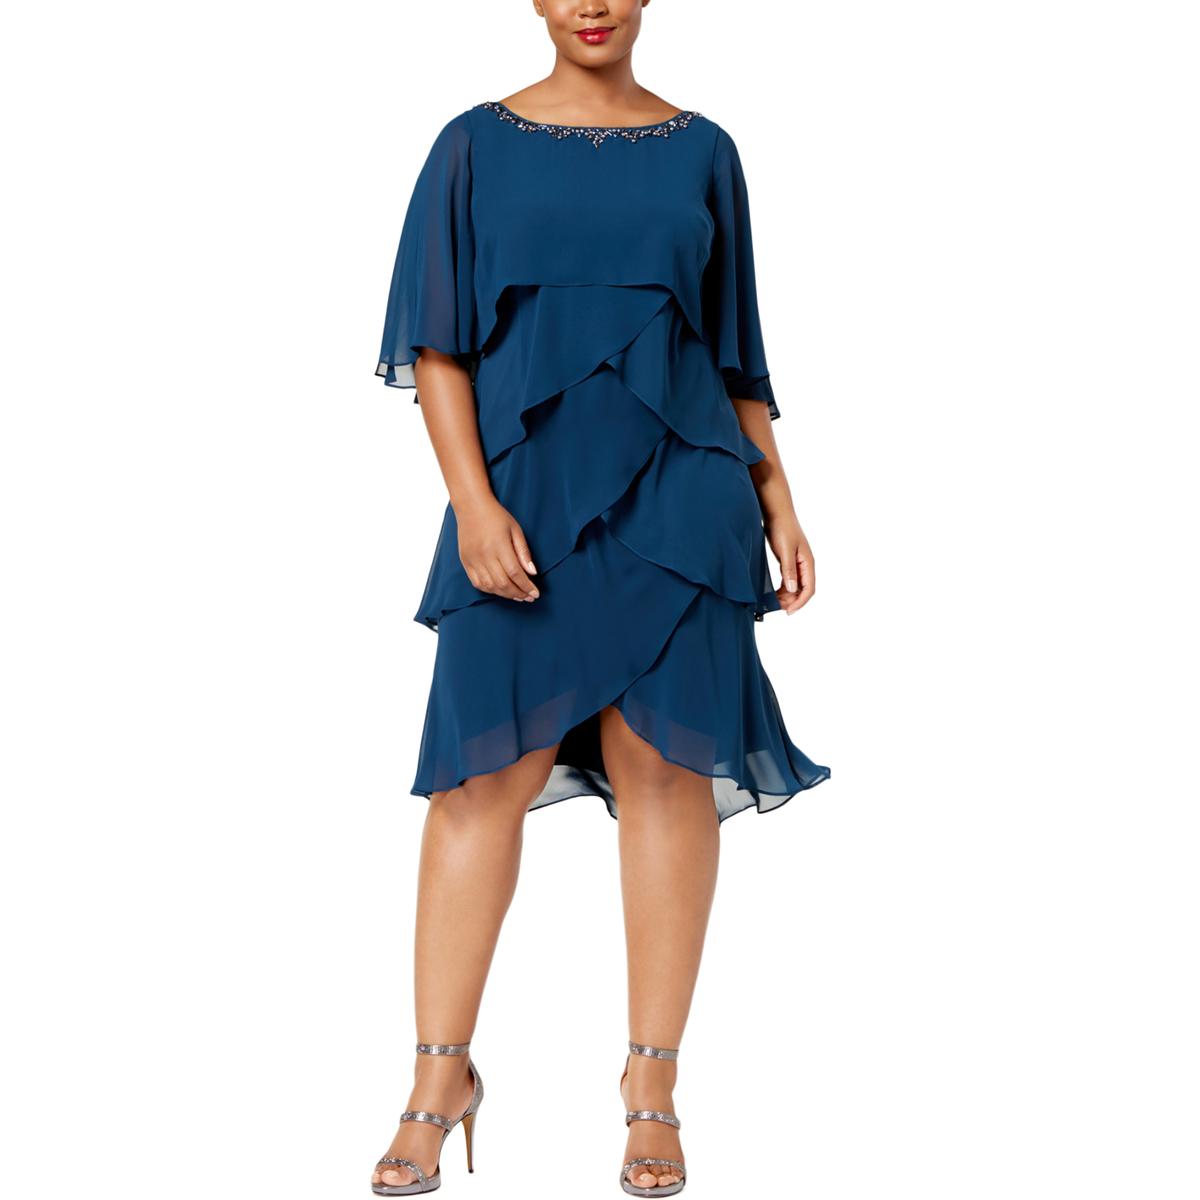 SLNY Womens Blue Chiffon Knee-Length Embellished Party Dress Plus 14W ...